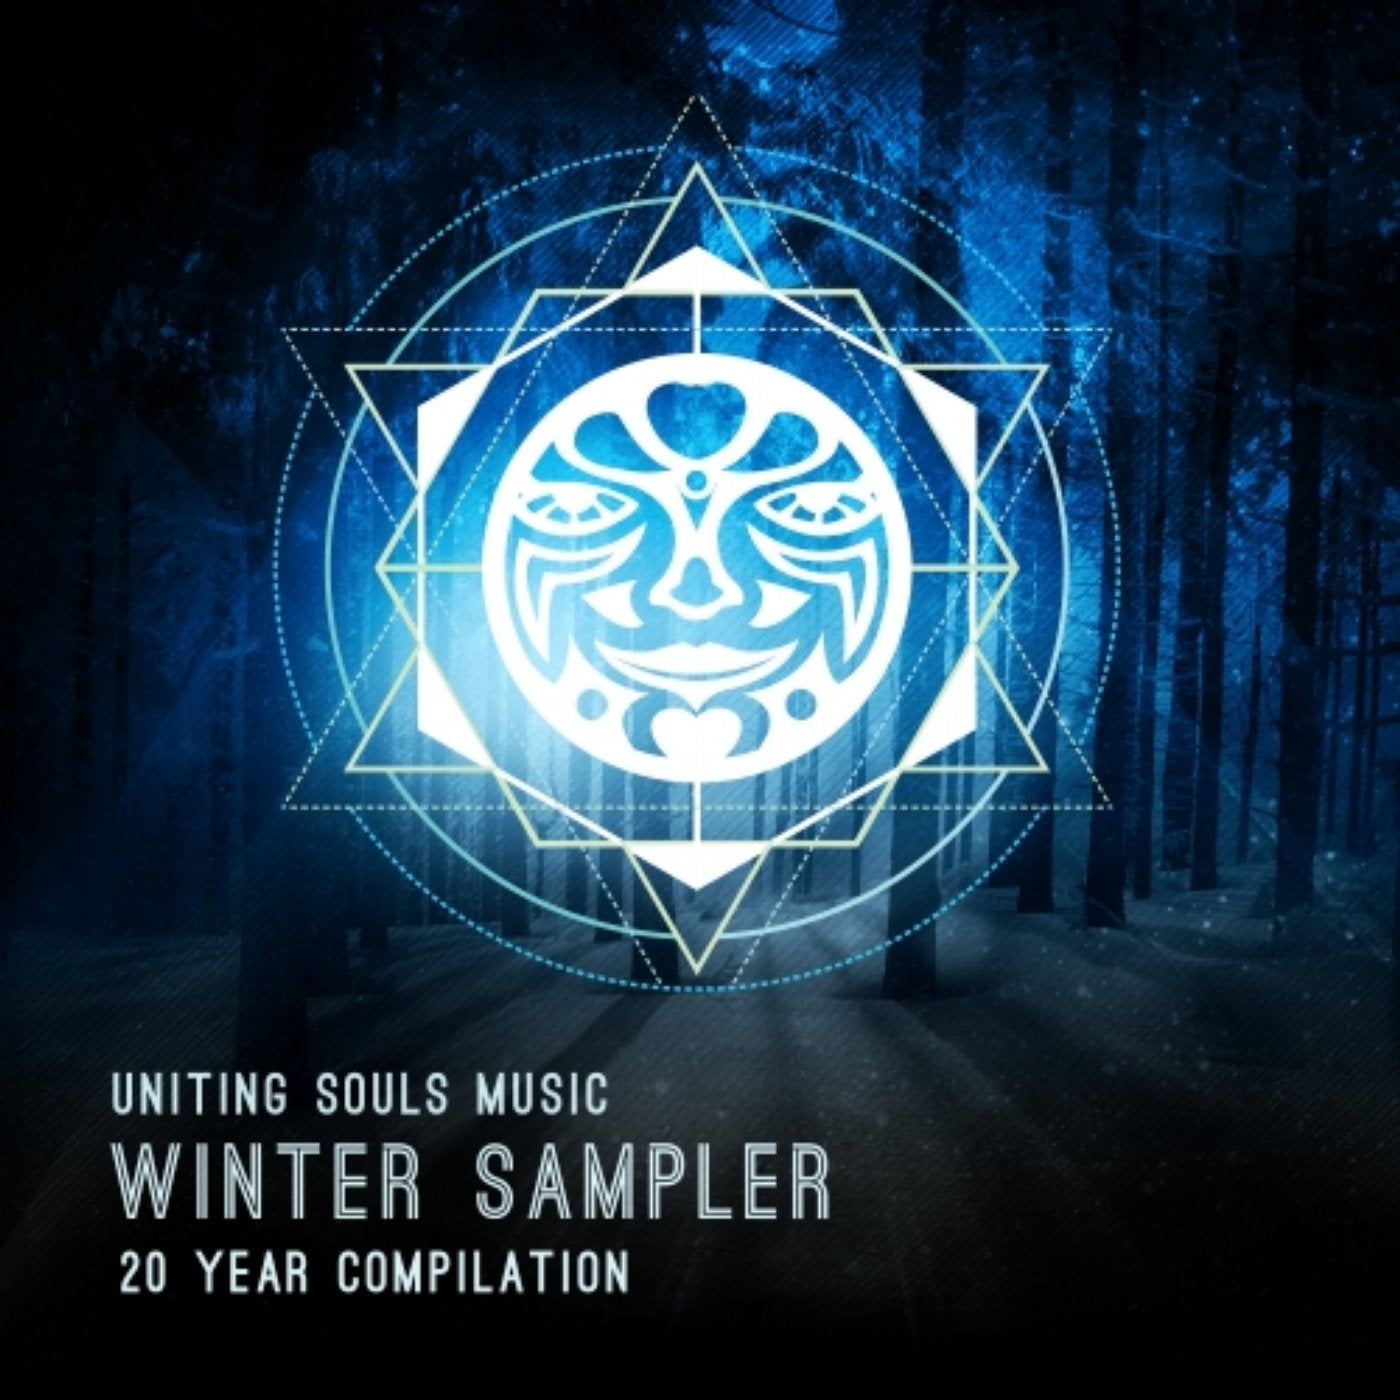 Uniting Souls Music Winter Sampler: 20 Year Compilation